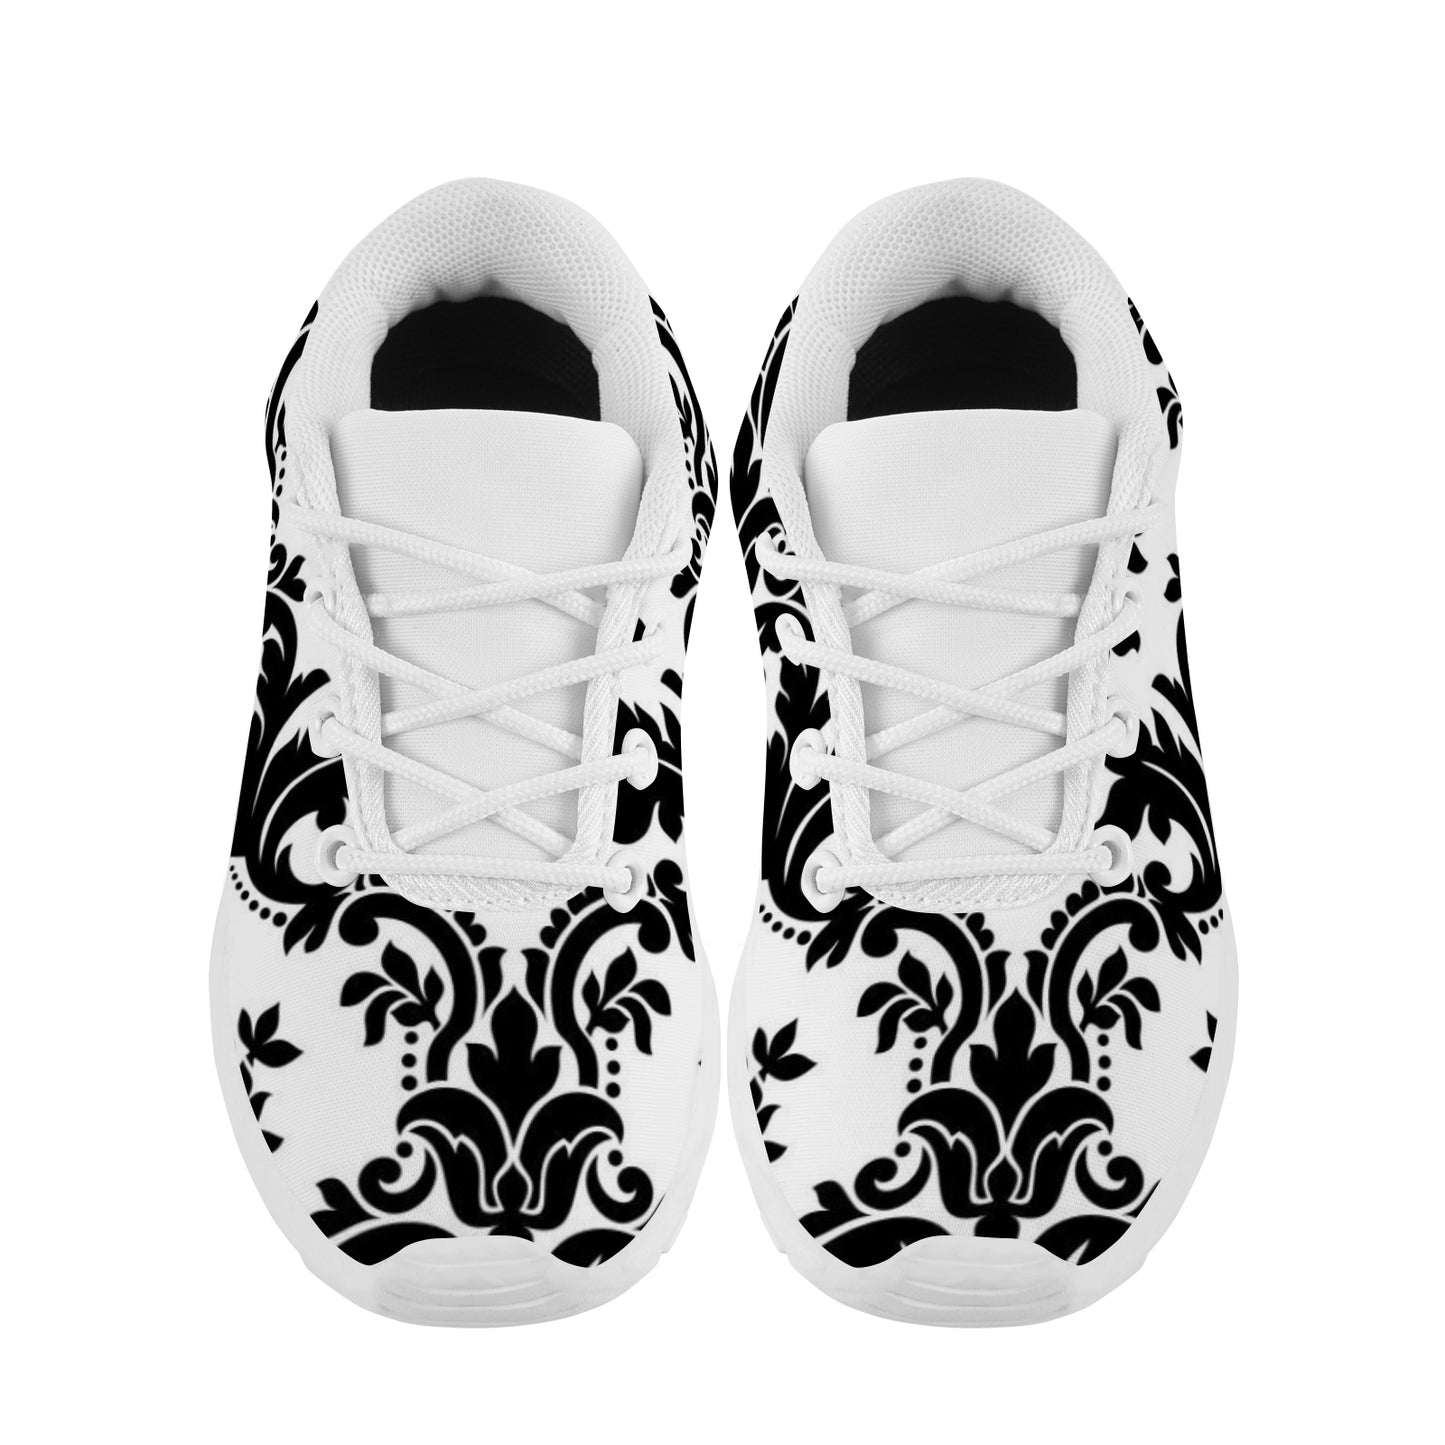 Kid's Sneakers - Black/White Floral